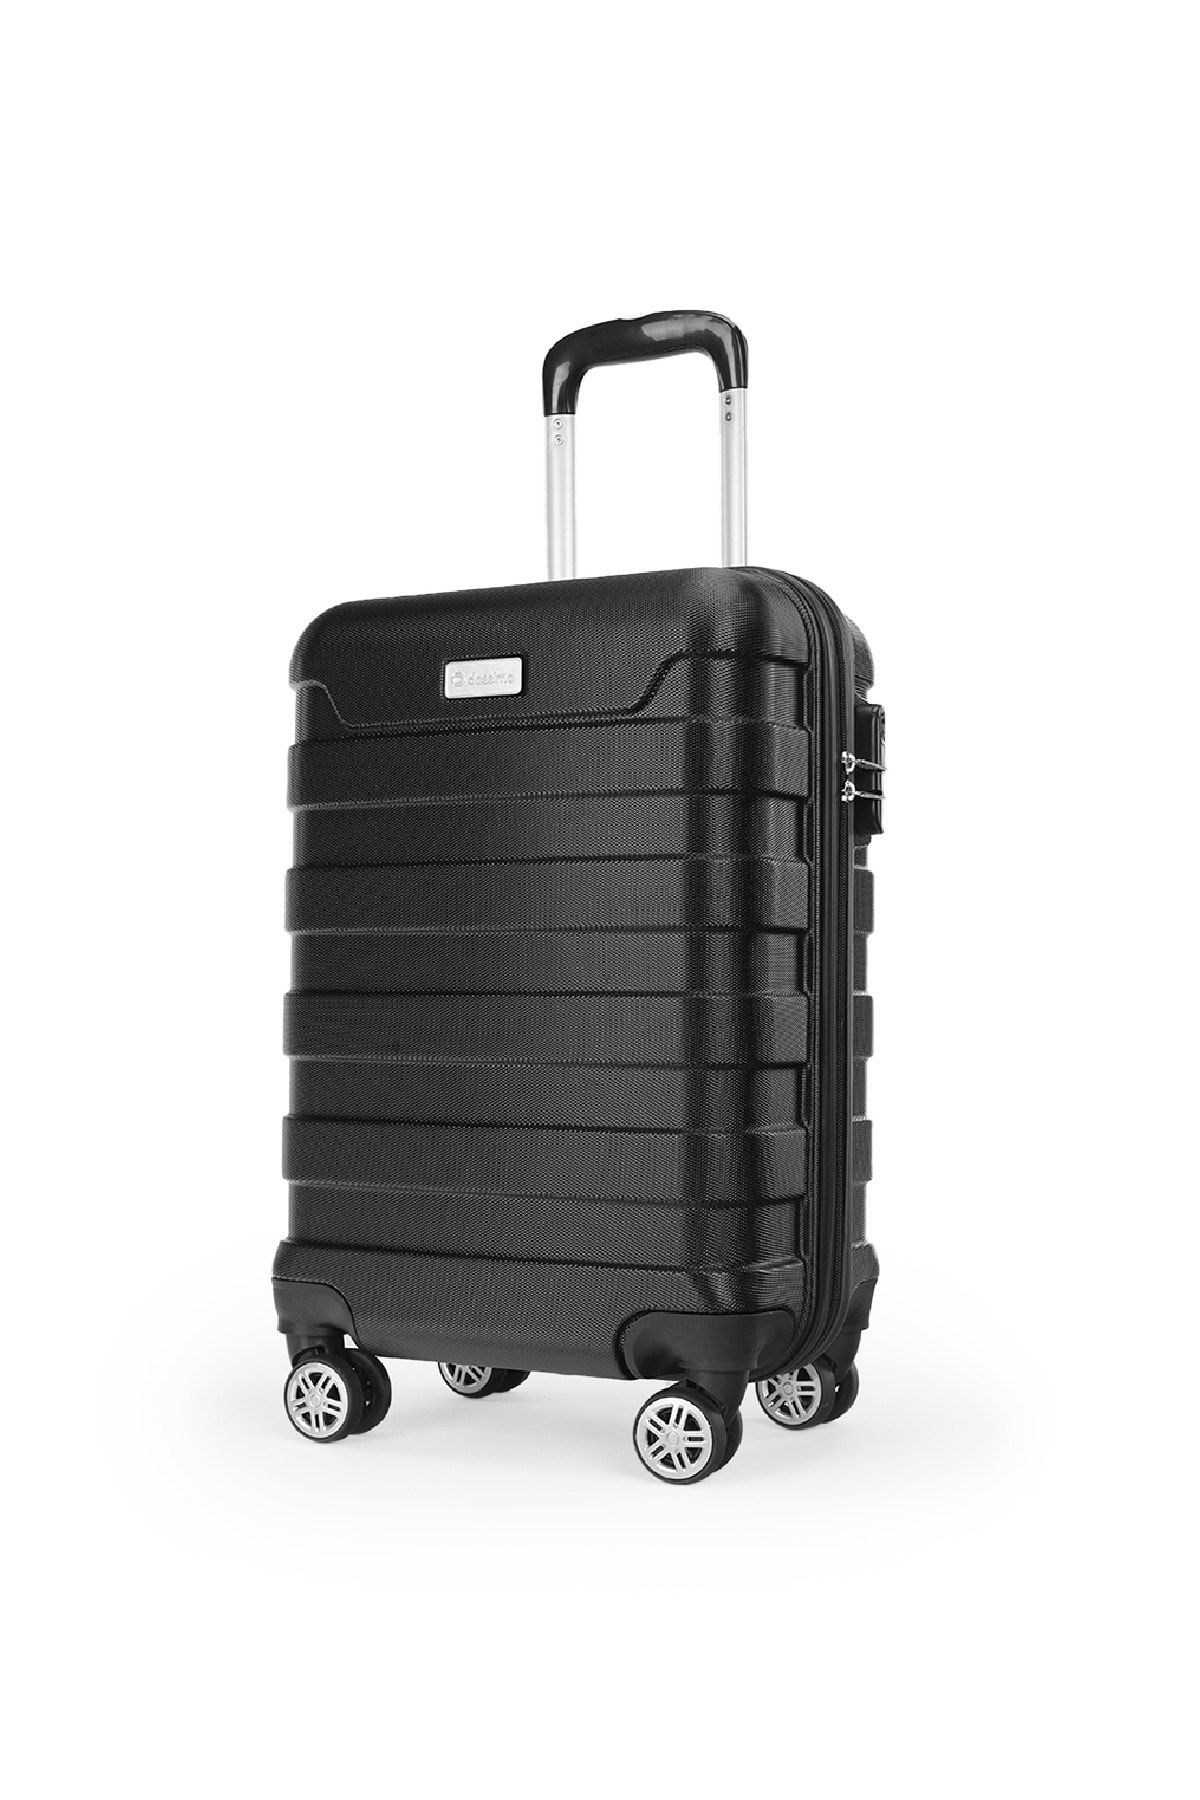 Dossimo Nova 55-64-78 Cm Siyah Unisex Kabin Boy valiz